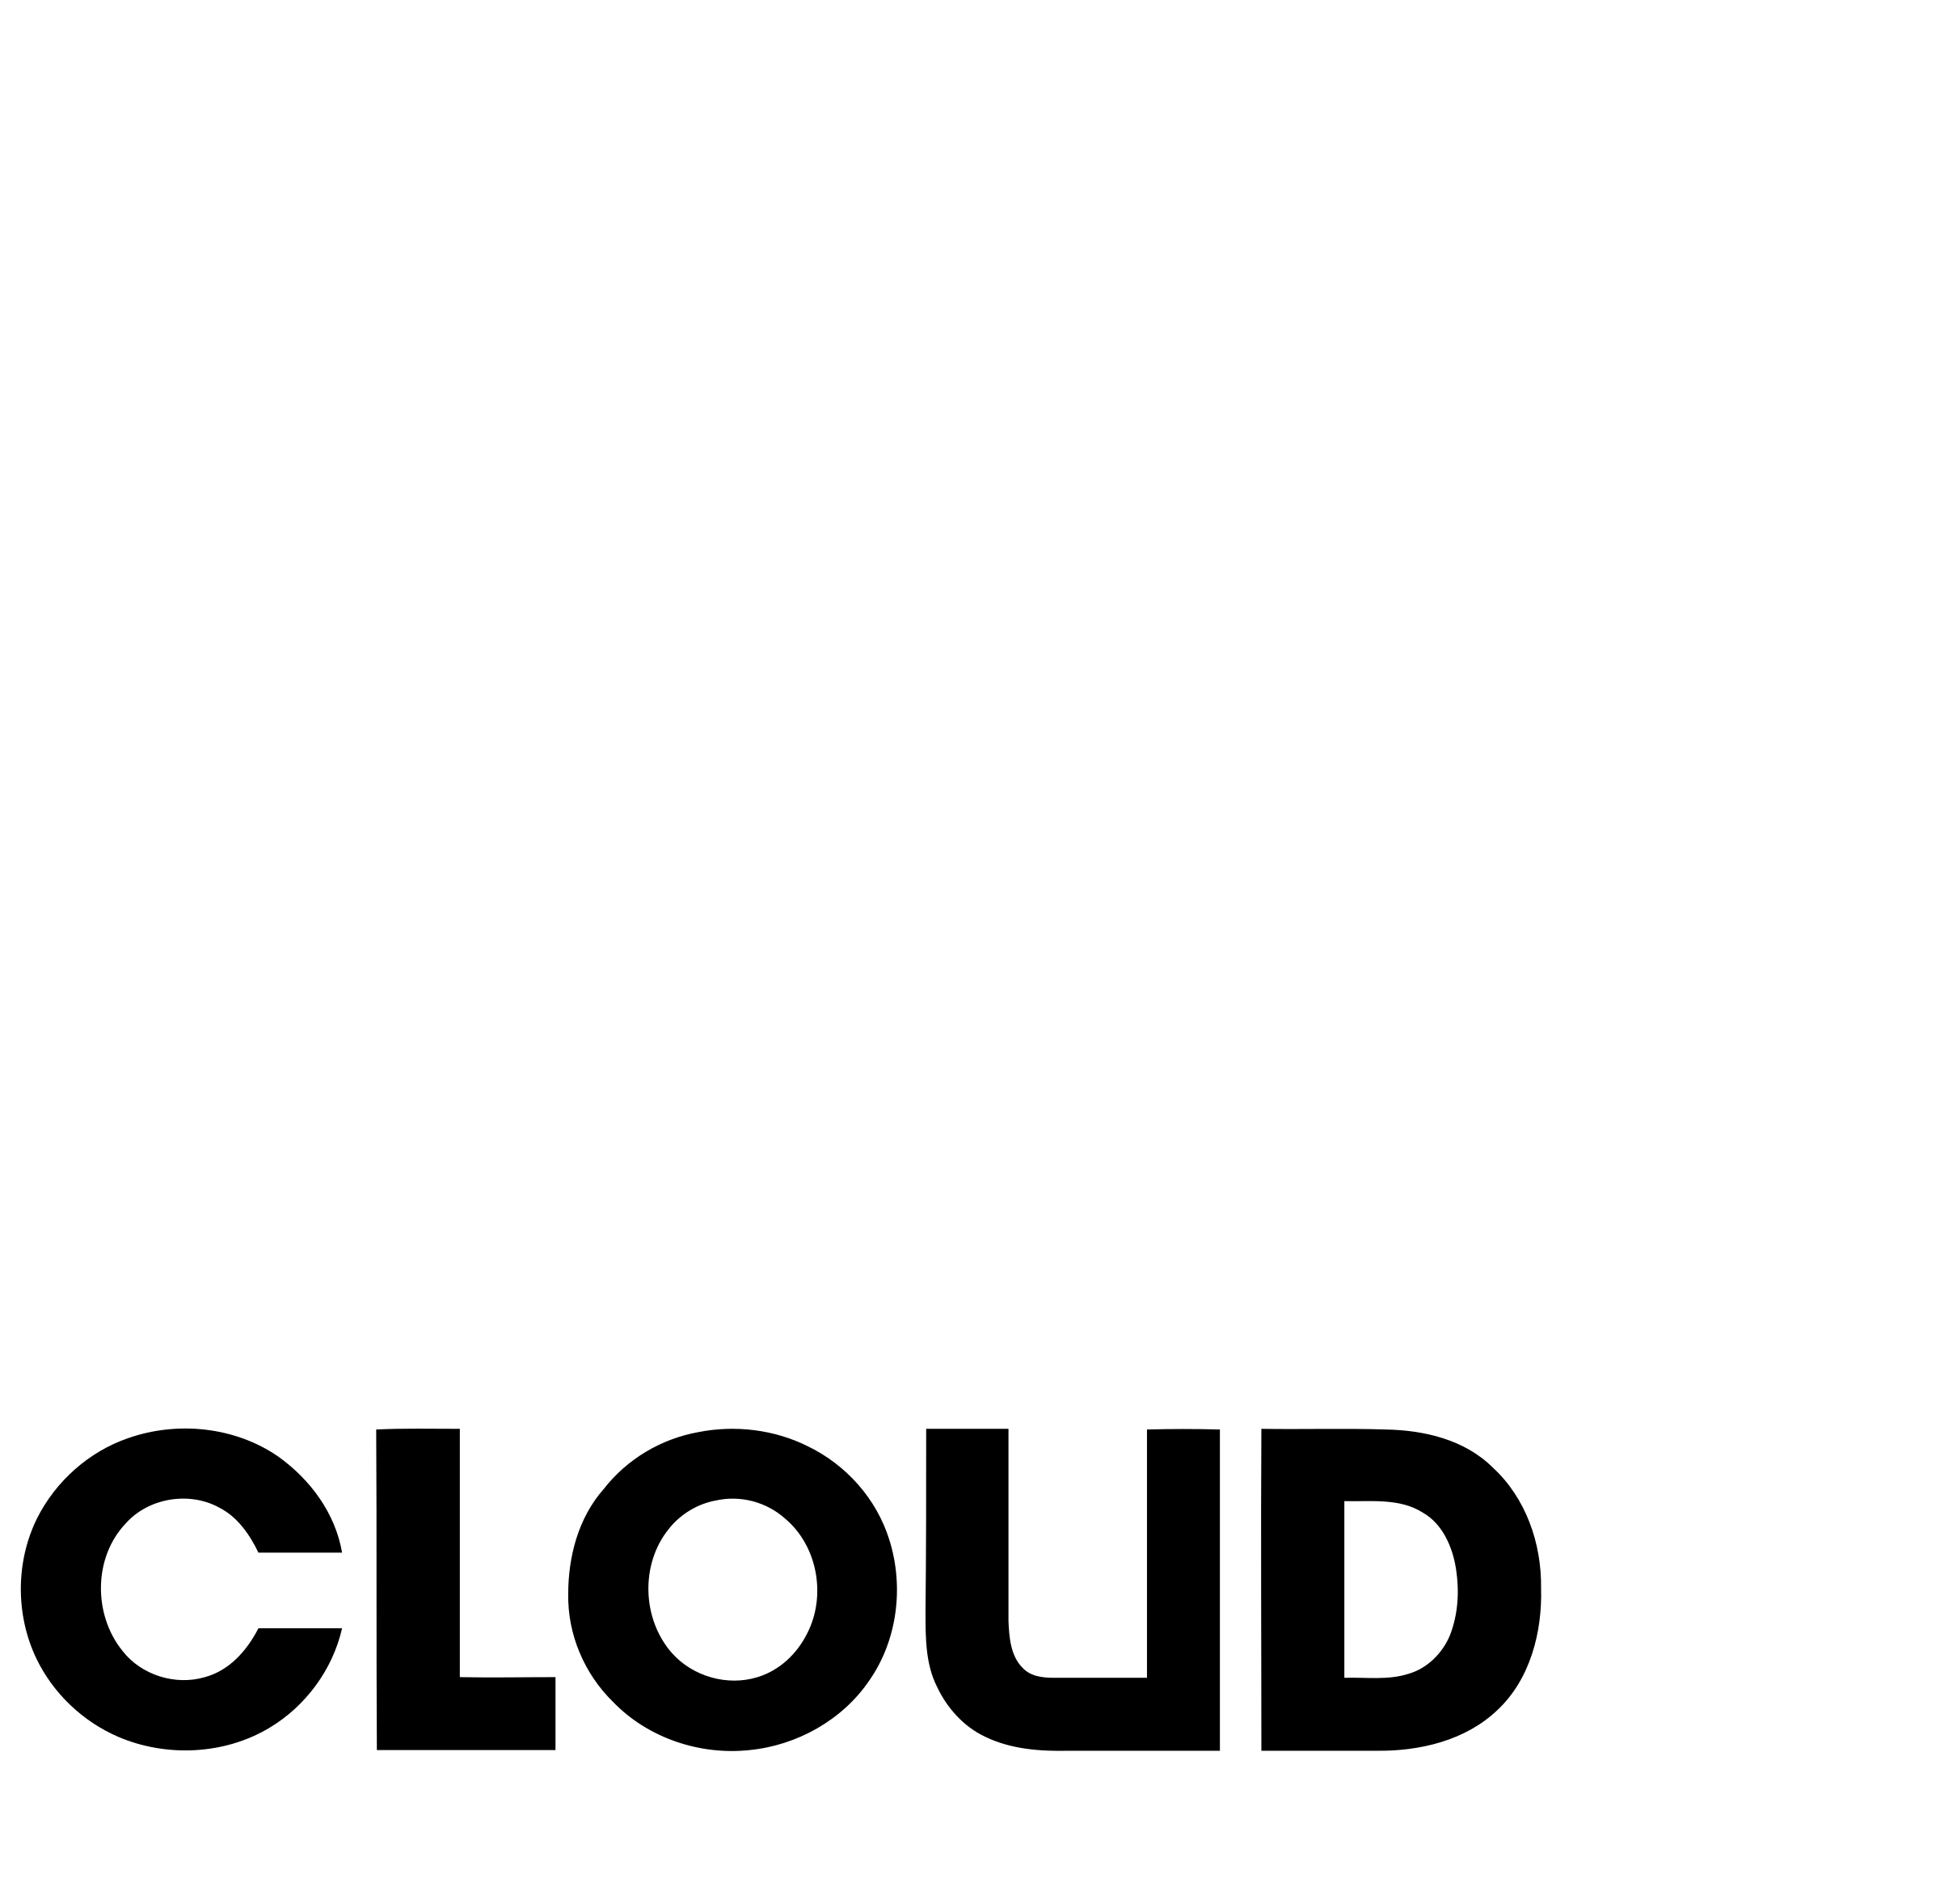 White Cloud Logo - Cloud 9 Logo PNG Transparent & SVG Vector - Freebie Supply